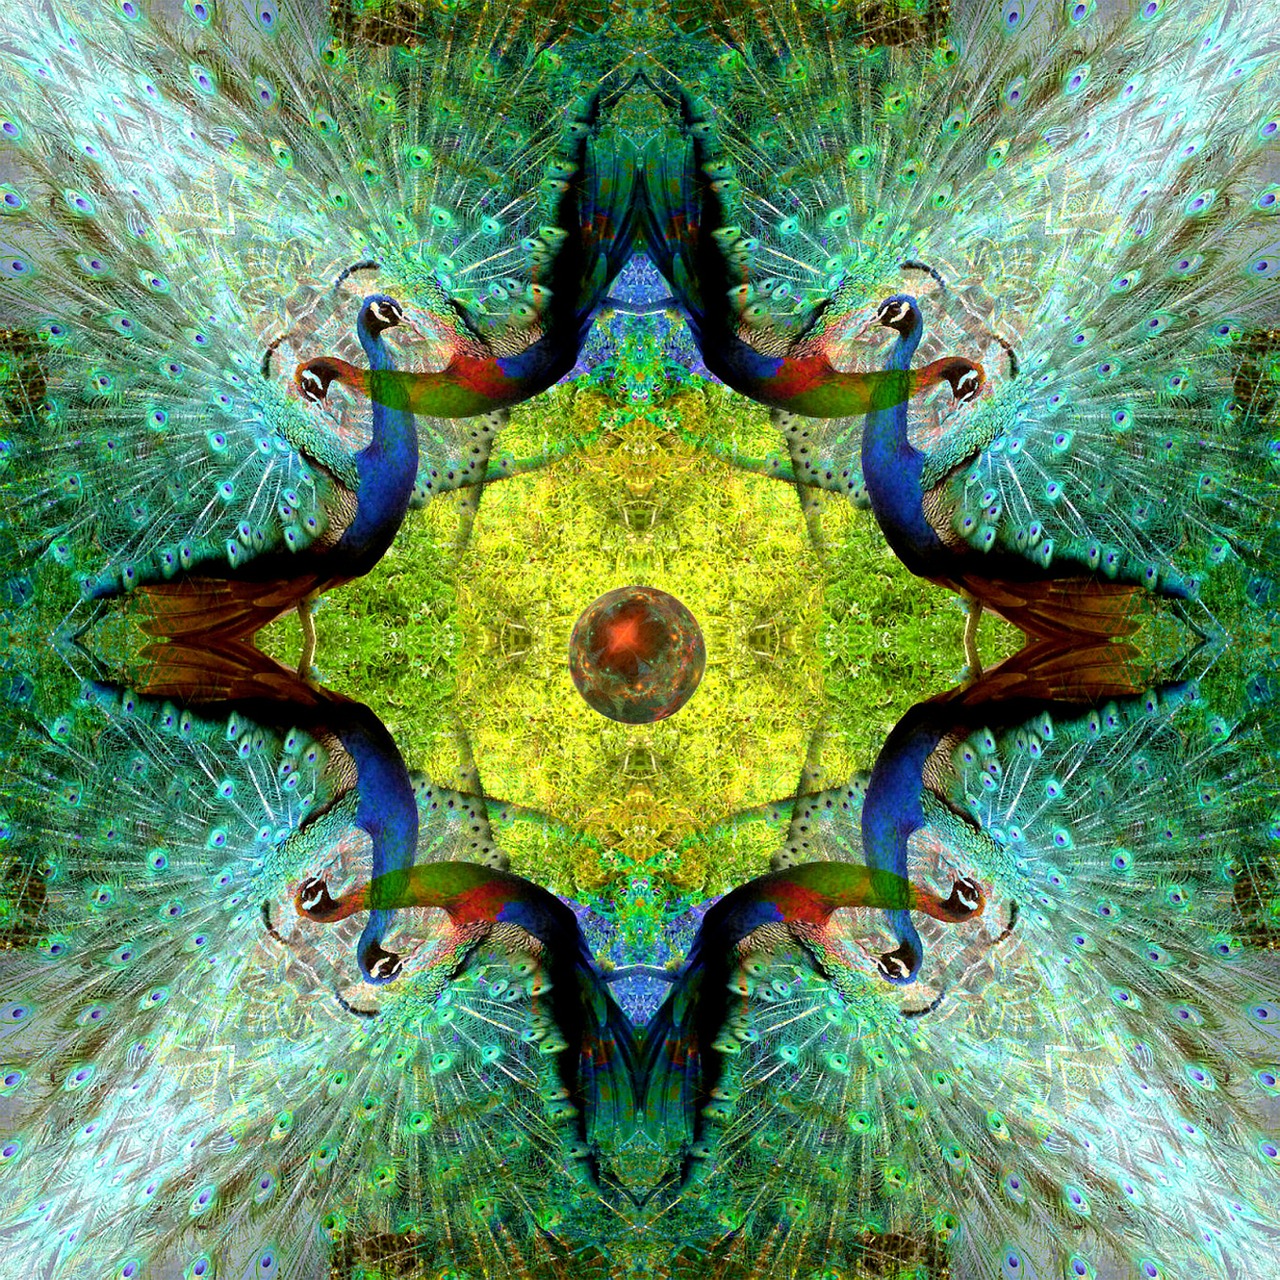 kaleidoscope digital art colorful free photo